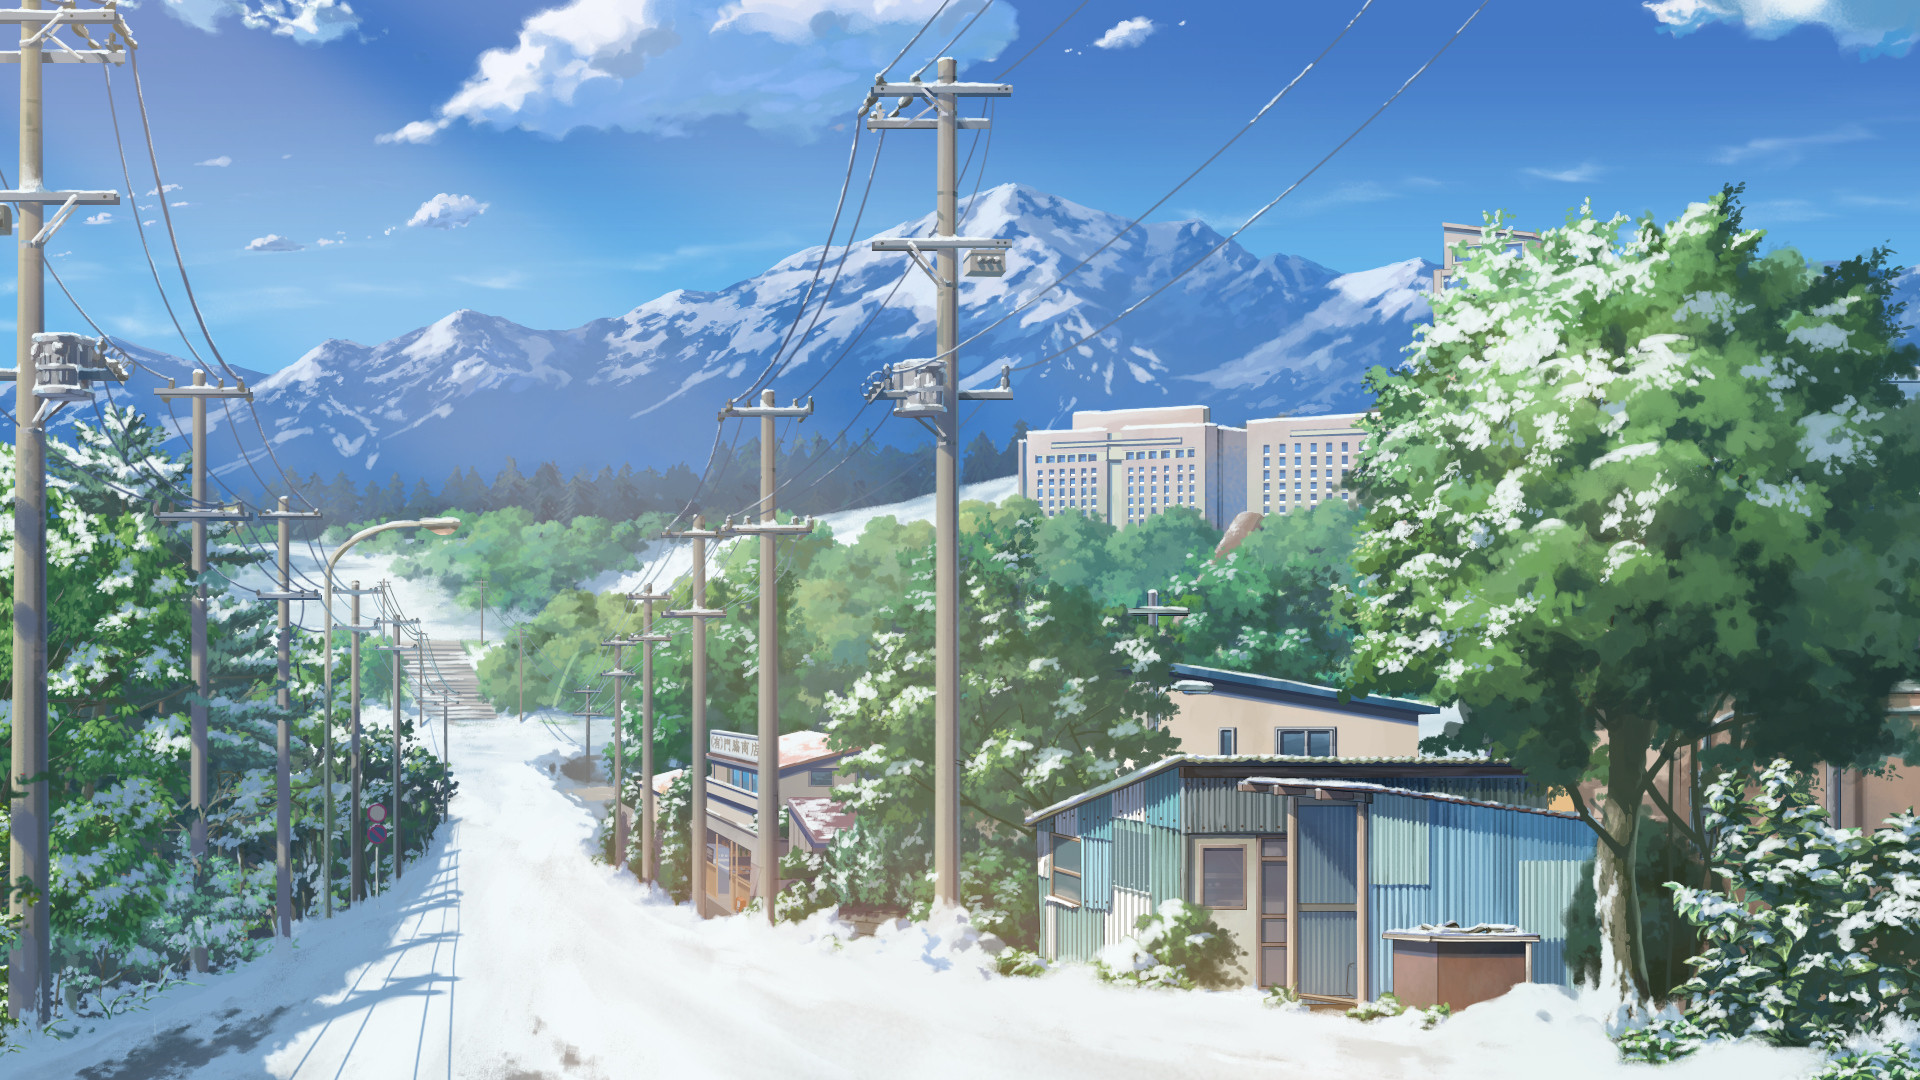 Anime Japan Streets Wallpaper